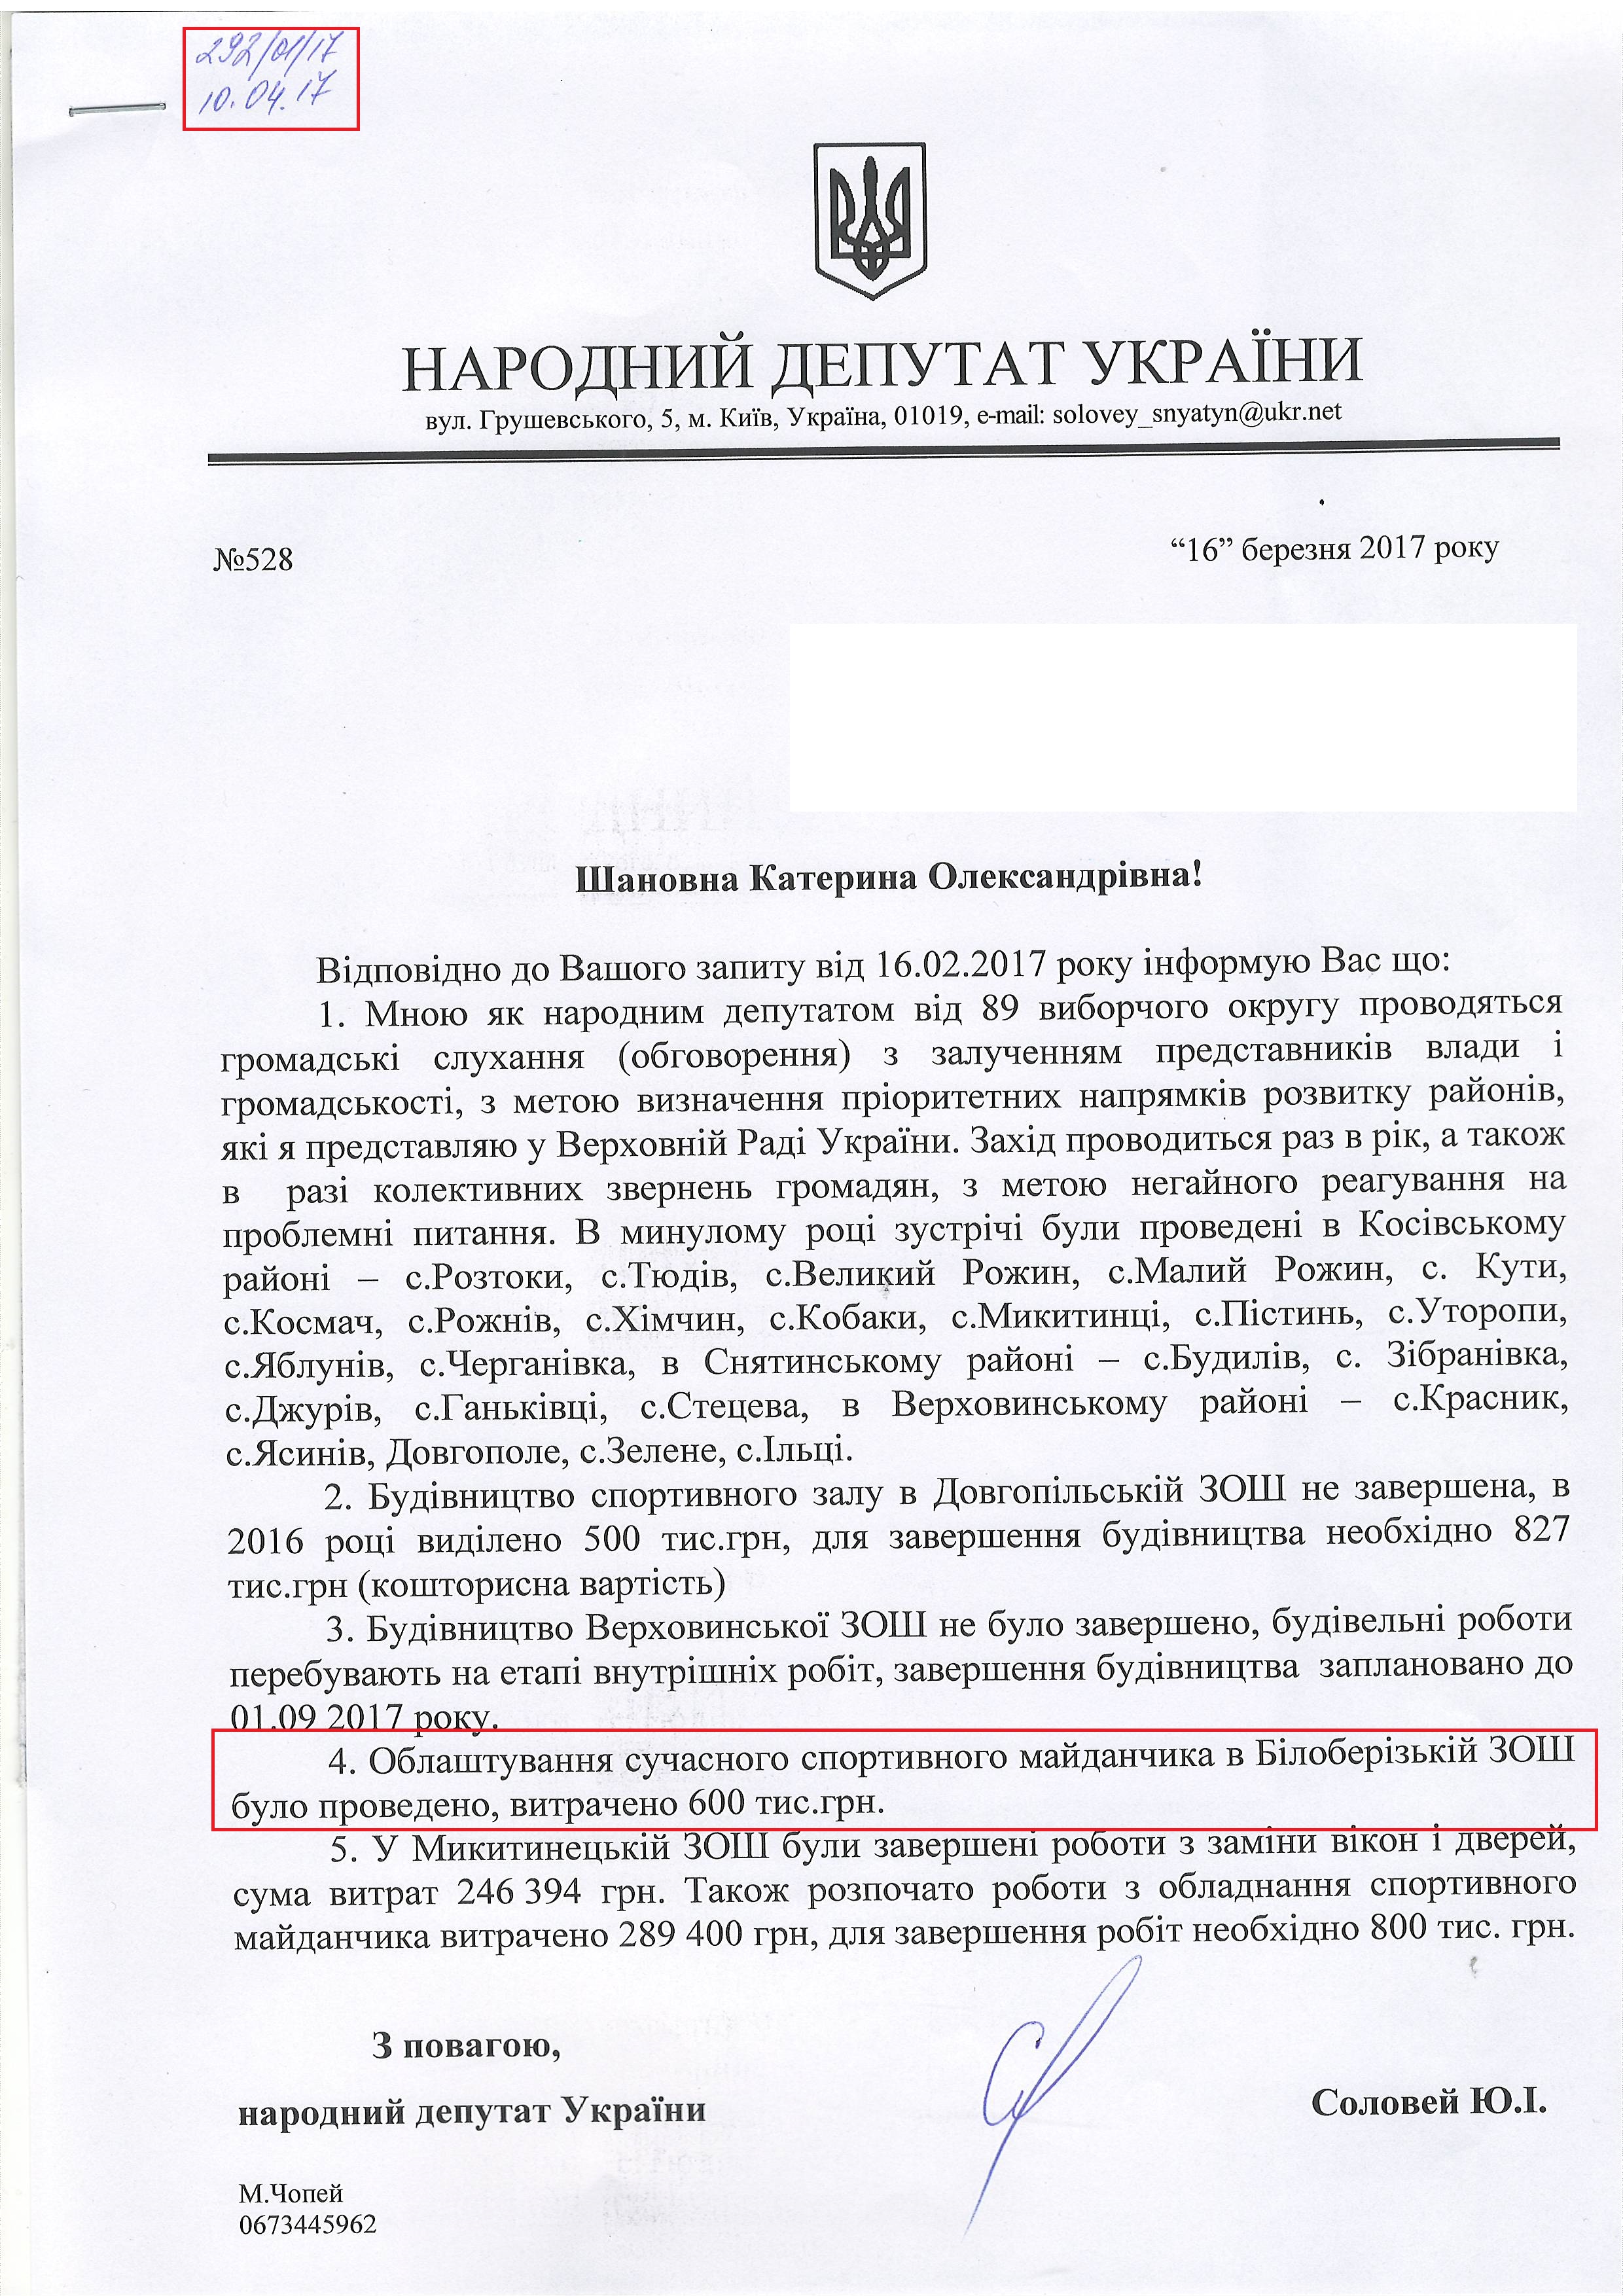 лист народного депутата